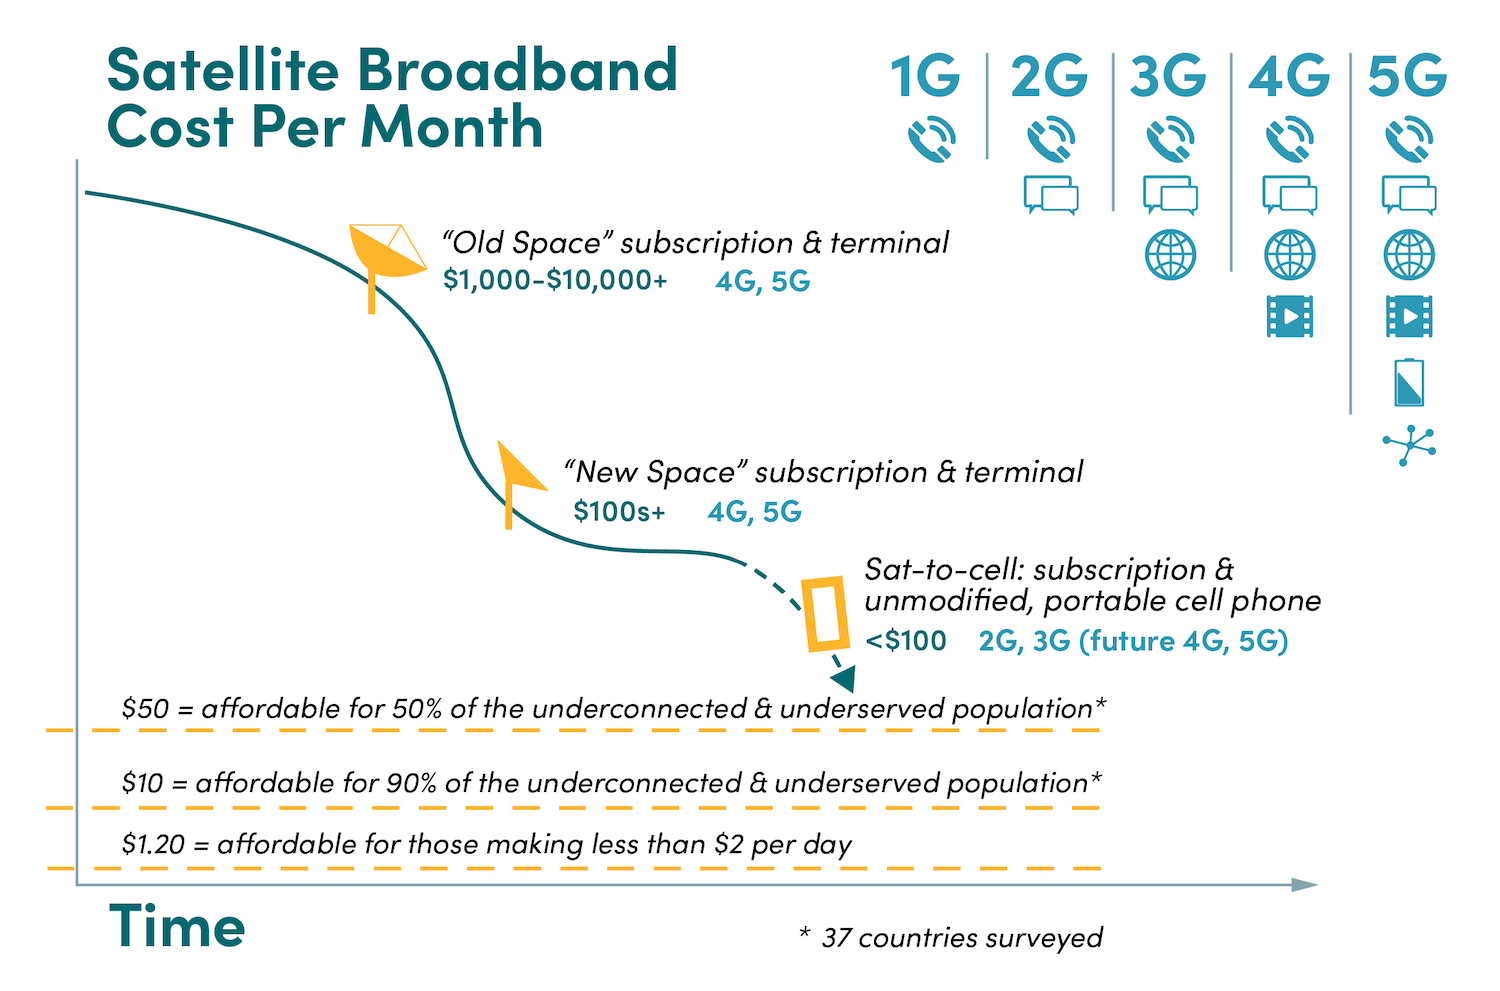 Figure 1. Satellite Broadband Cost Per Month